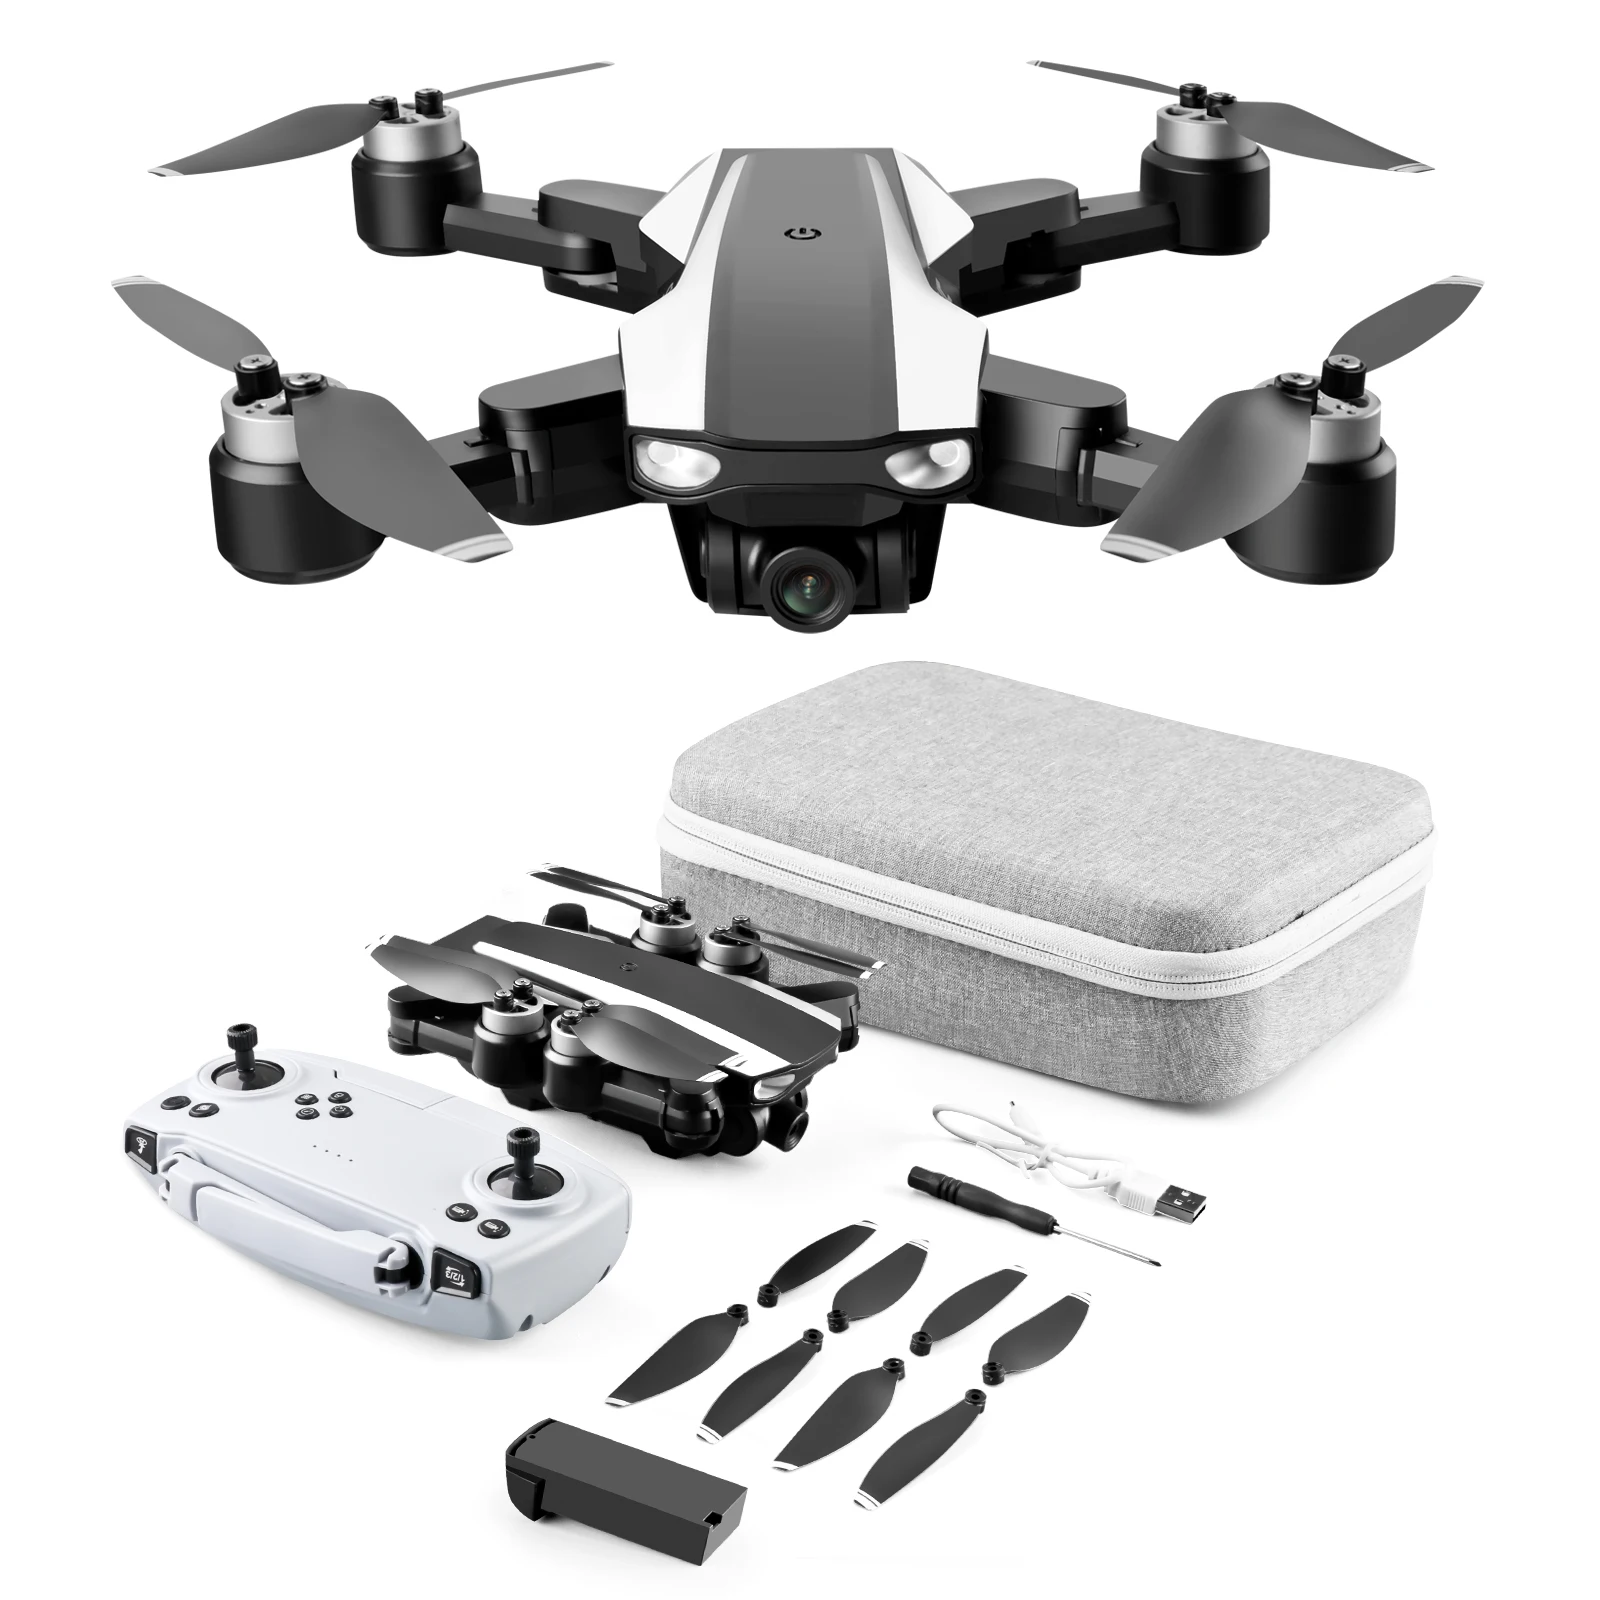 

2021 Amazon hot sale S105 Mini RC Folding Quadcopter GPS drone with camera 6k/4k HD mini drones toys Smart follow Selfie drone, Black